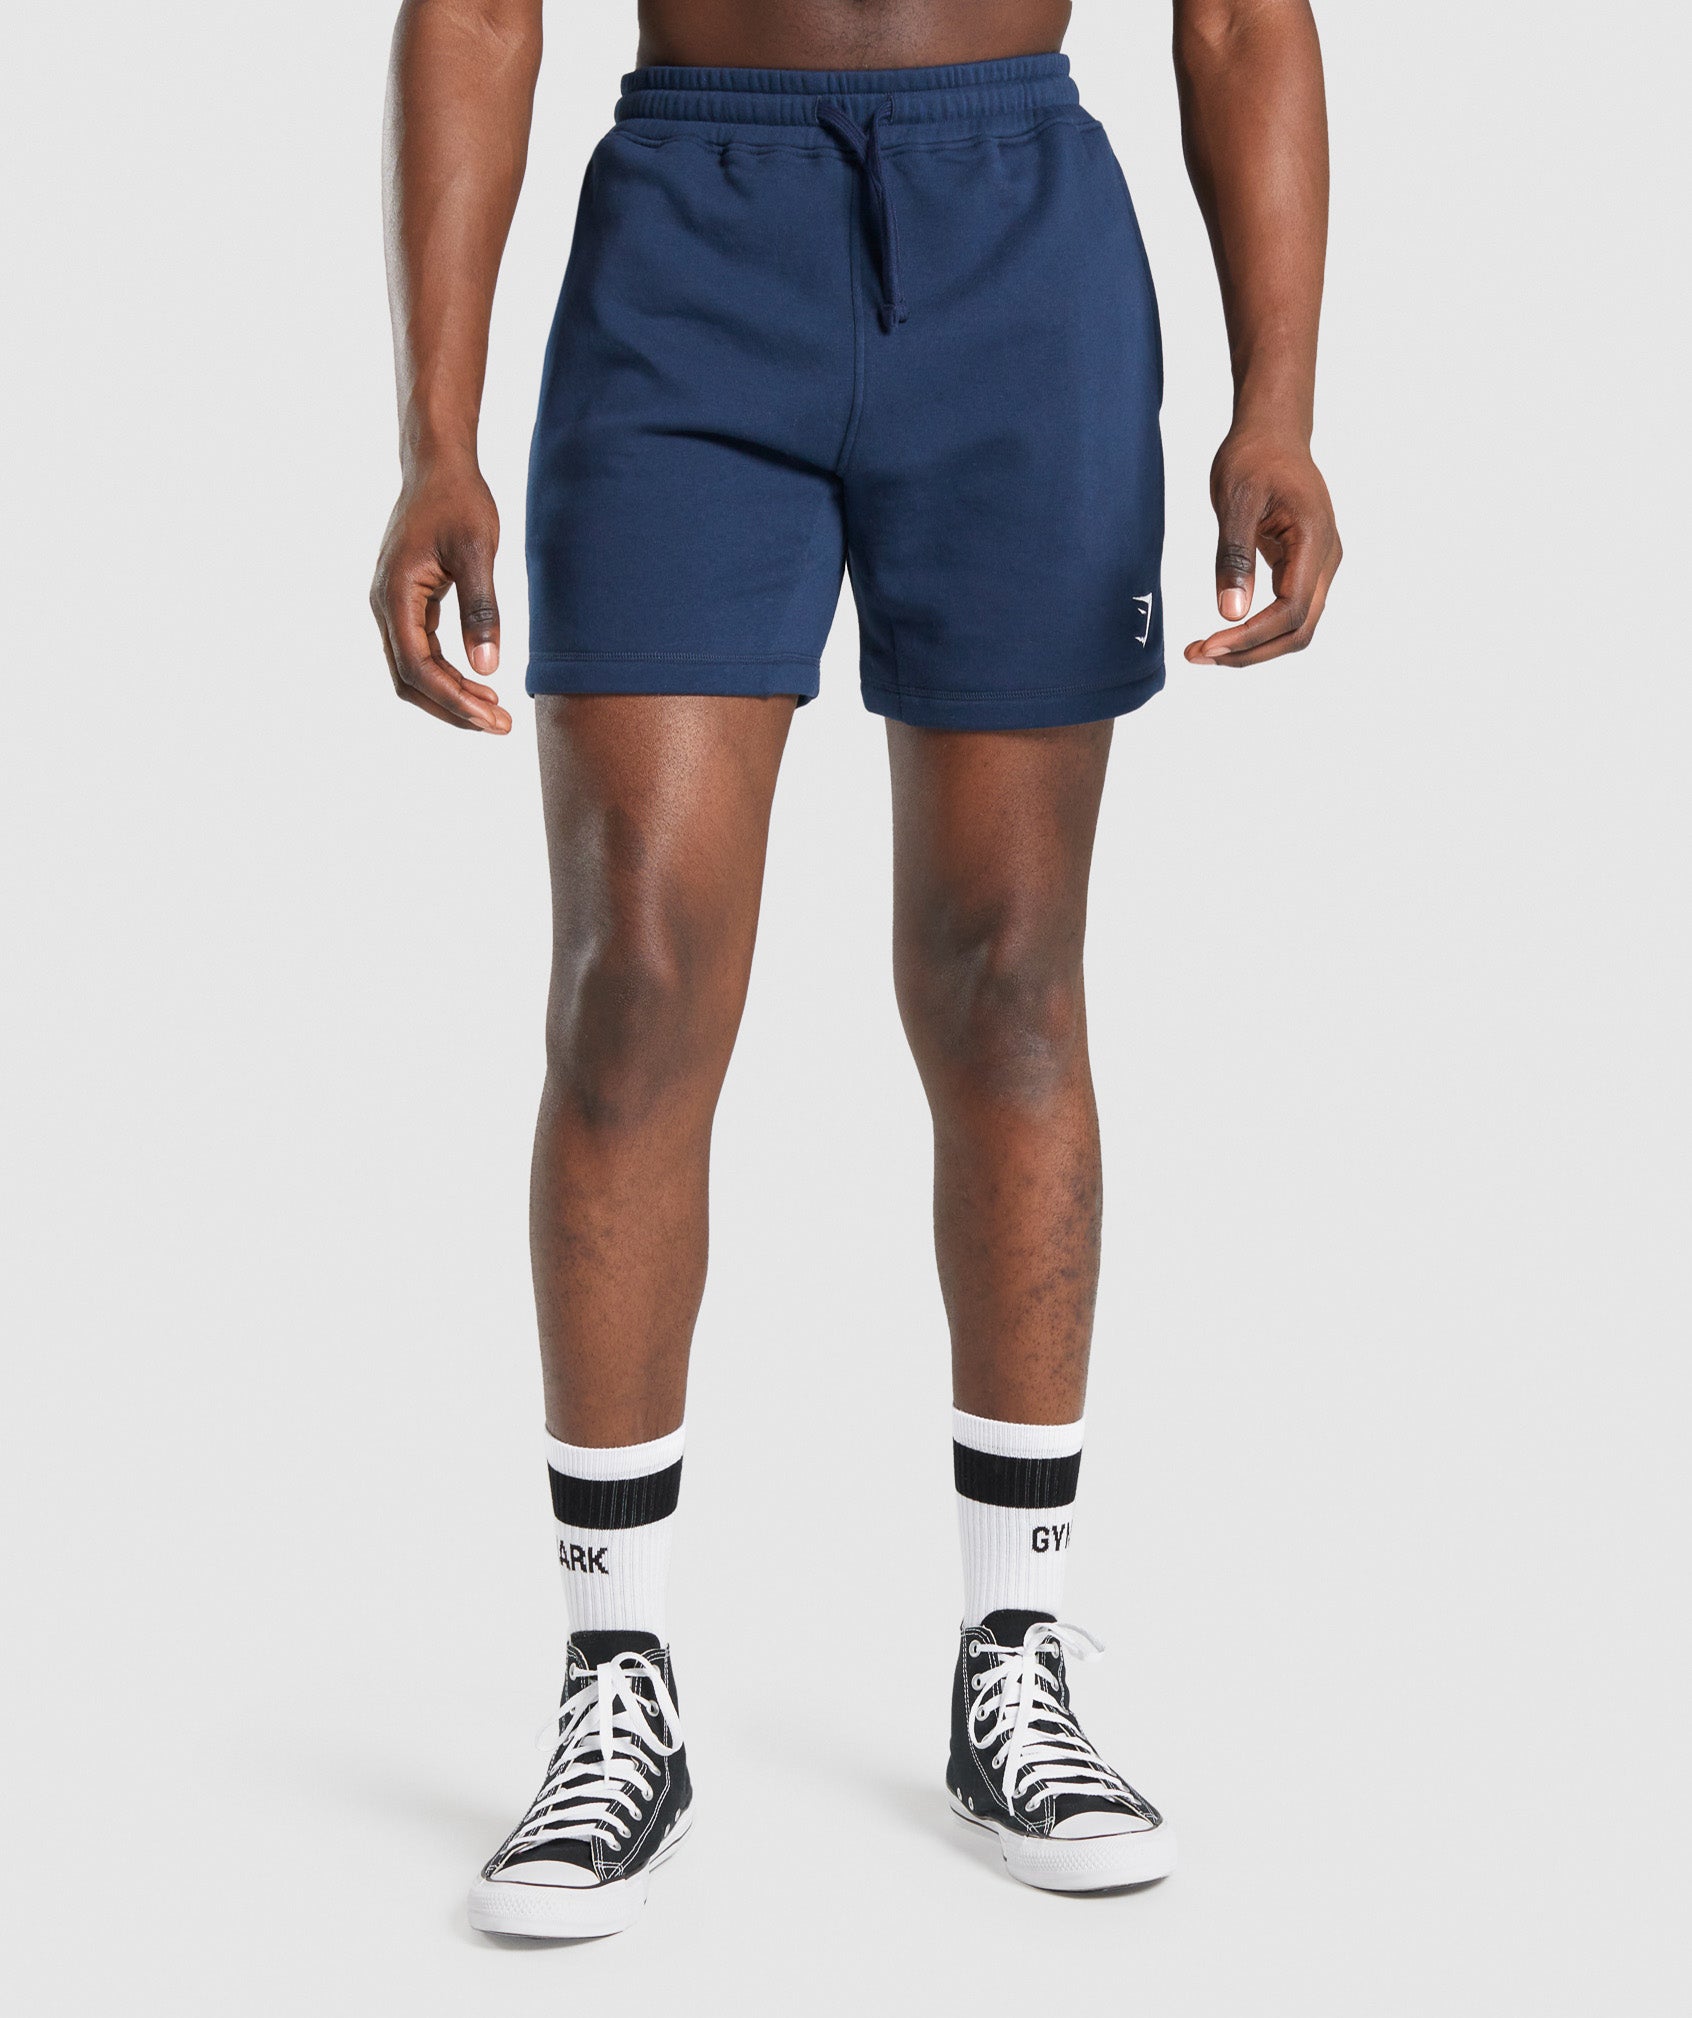 Gymshark Crest Shorts - Navy